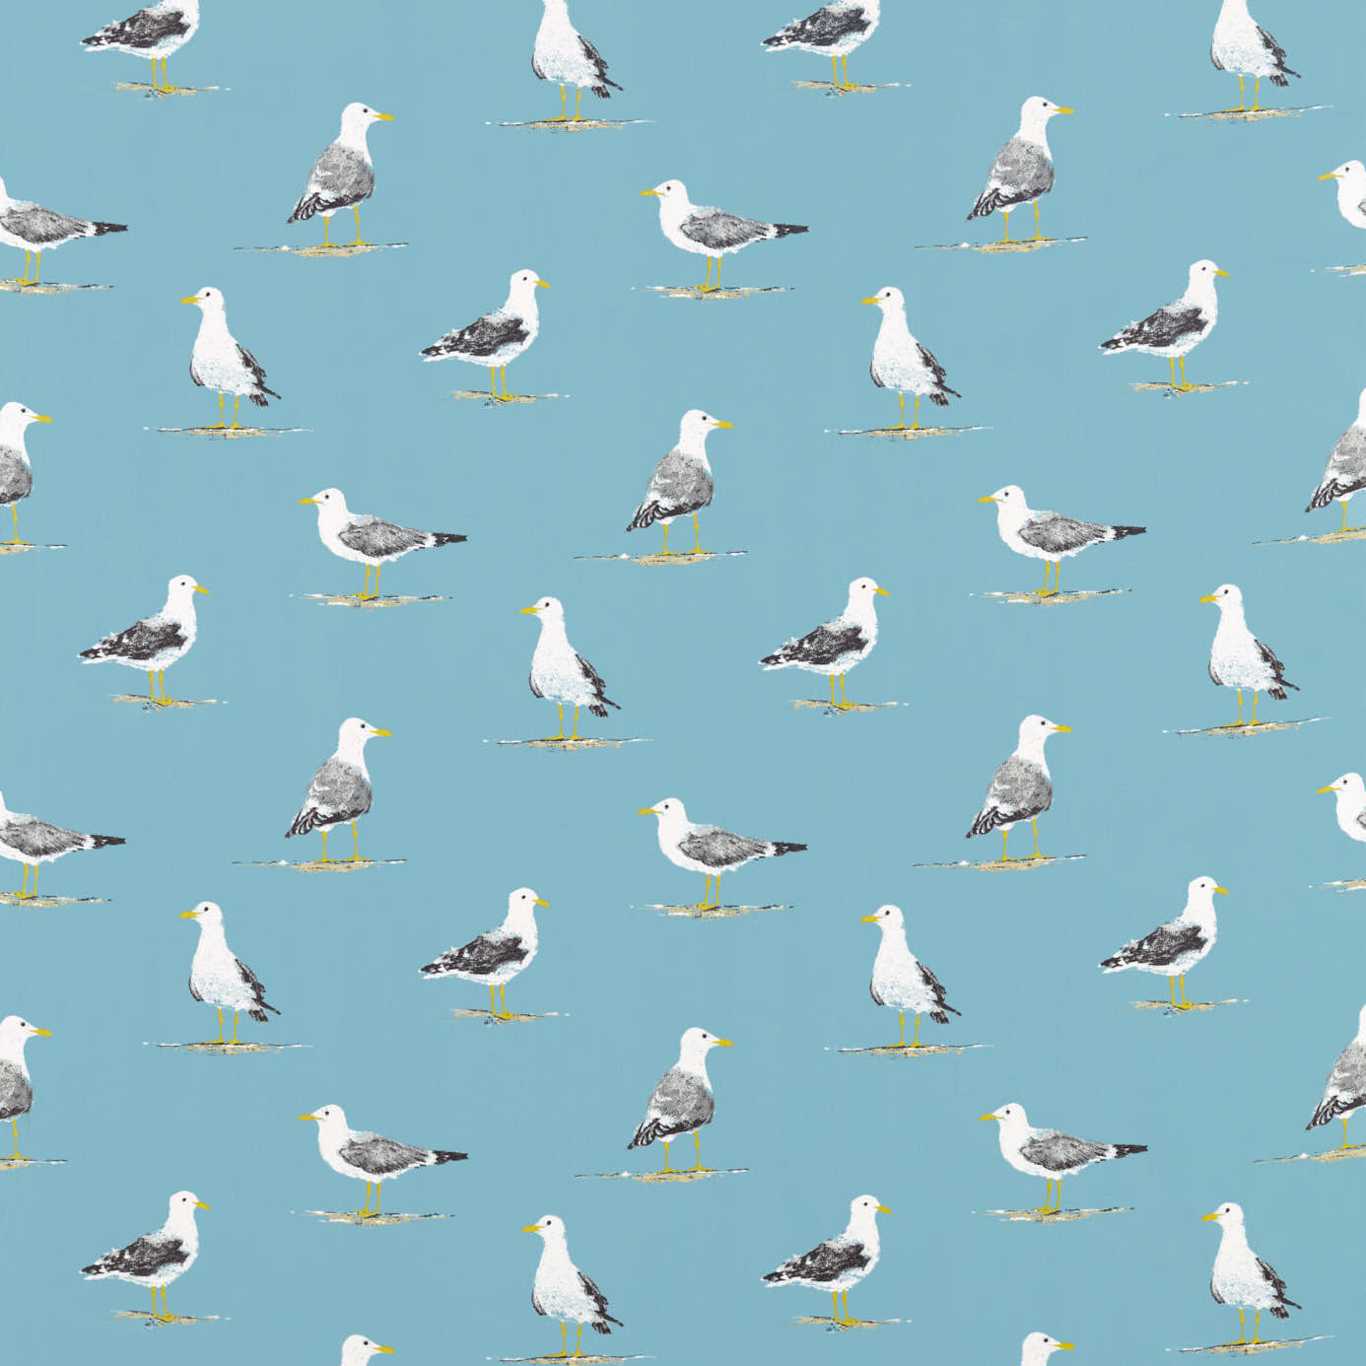 Shore Birds Fabric by Sanderson Home